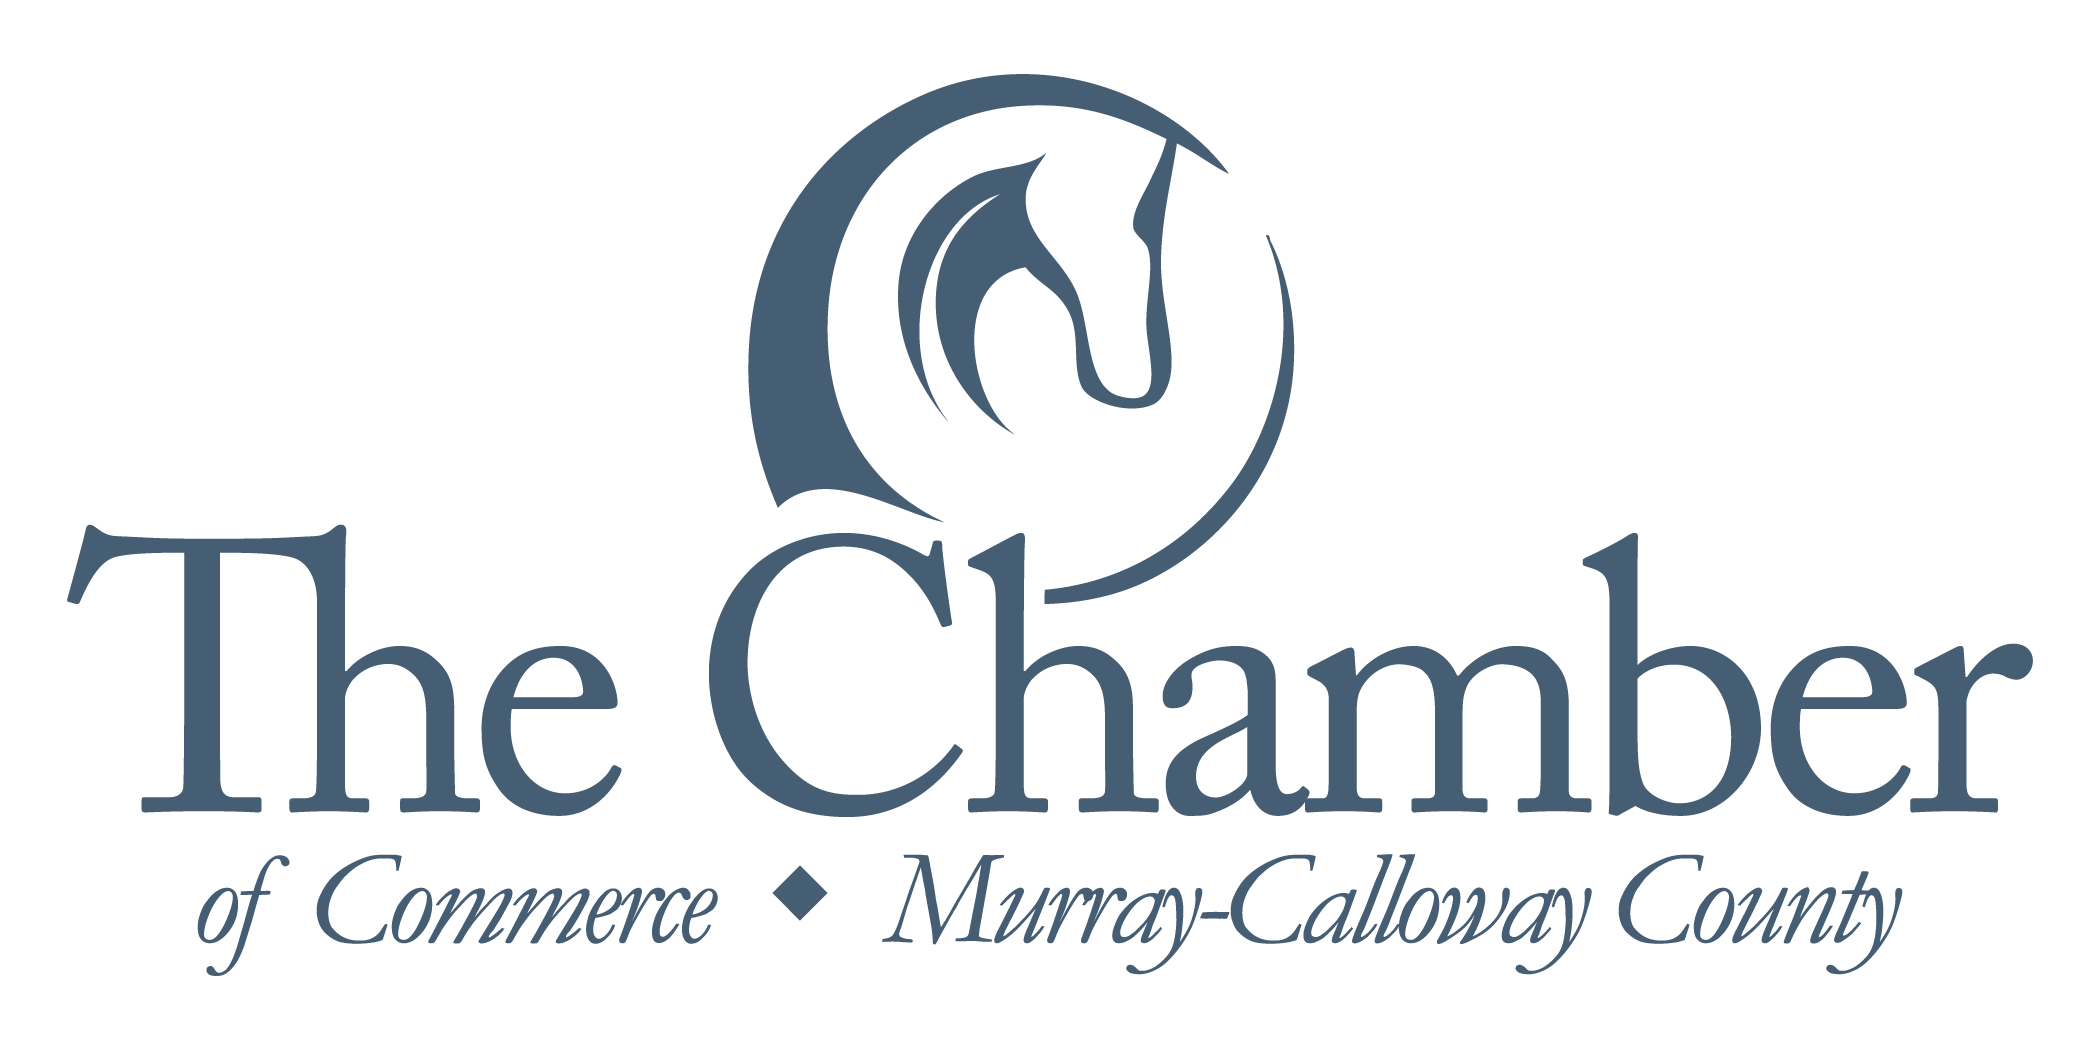 Murray-Calloway County Chamber of Commerce logo